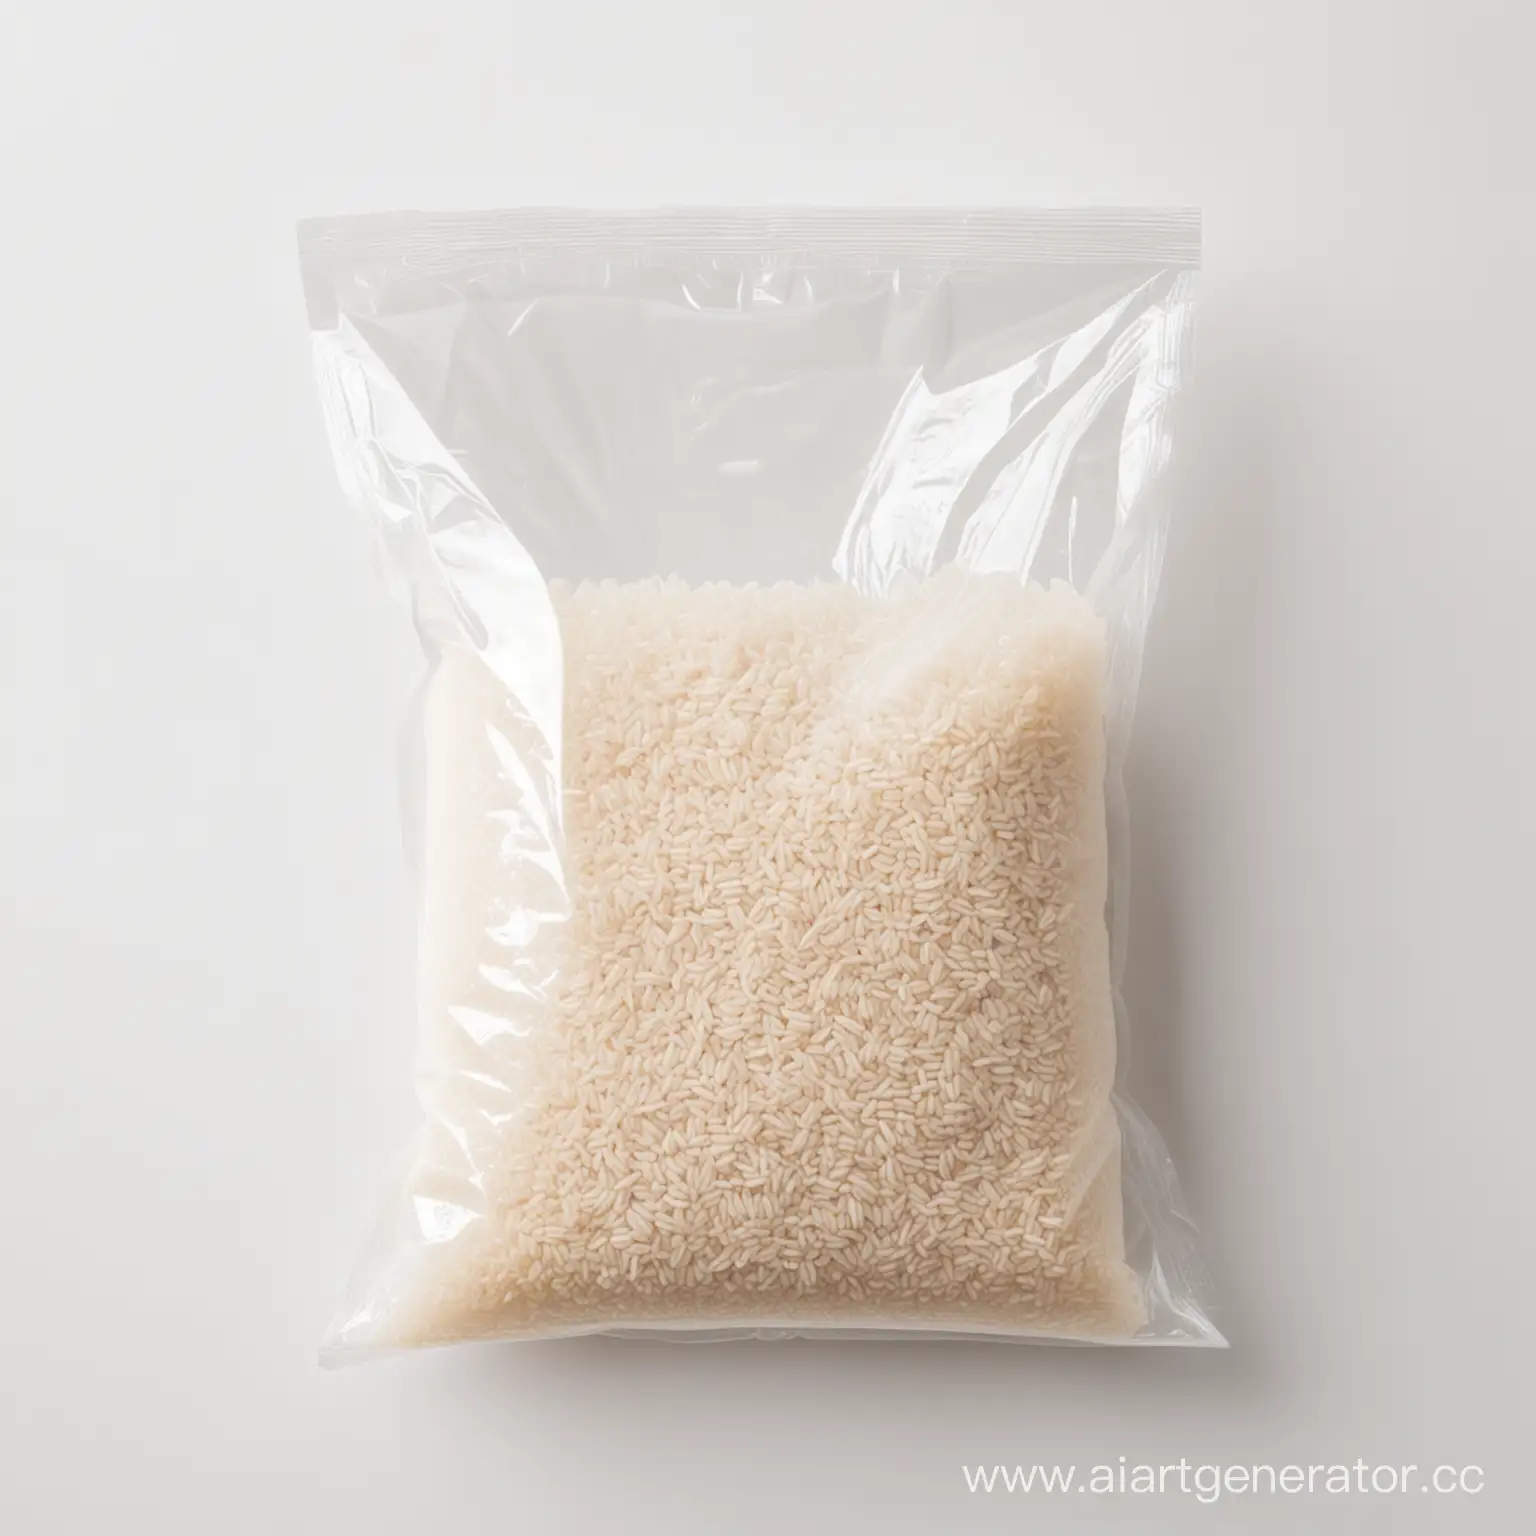 Transparent-Polyethylene-Bag-of-Rice-on-White-Background